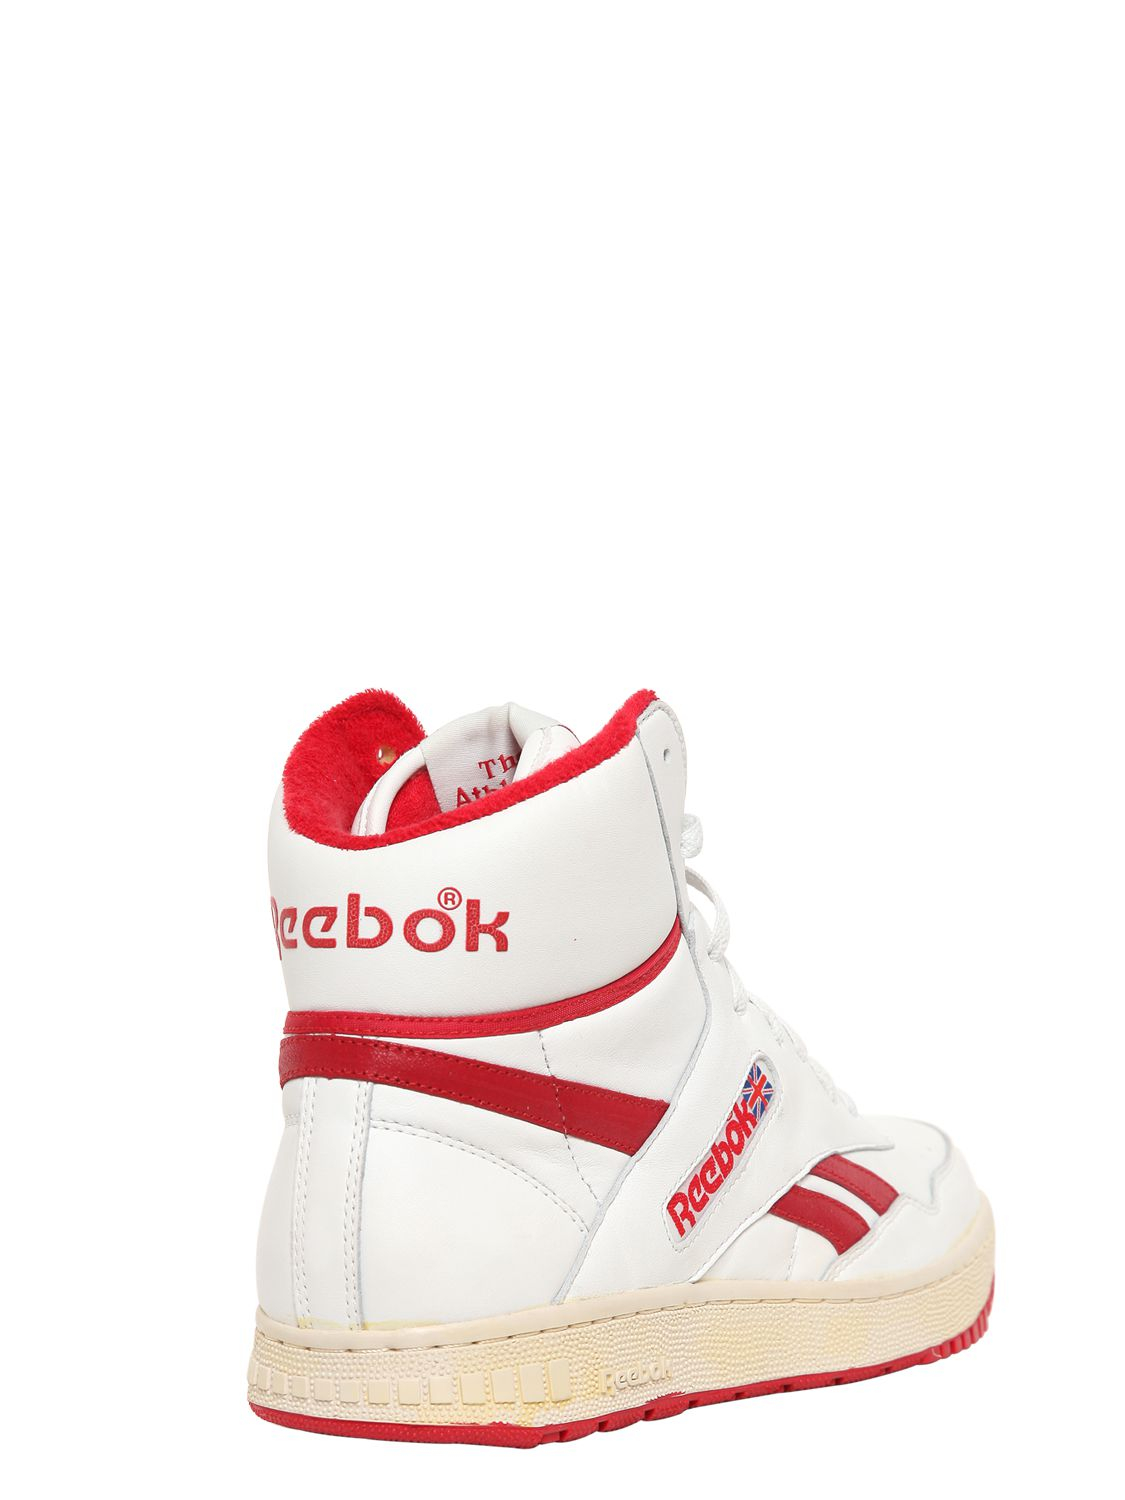 Lyst - Reebok 90 Replica Basketball Sneakers in White for Men